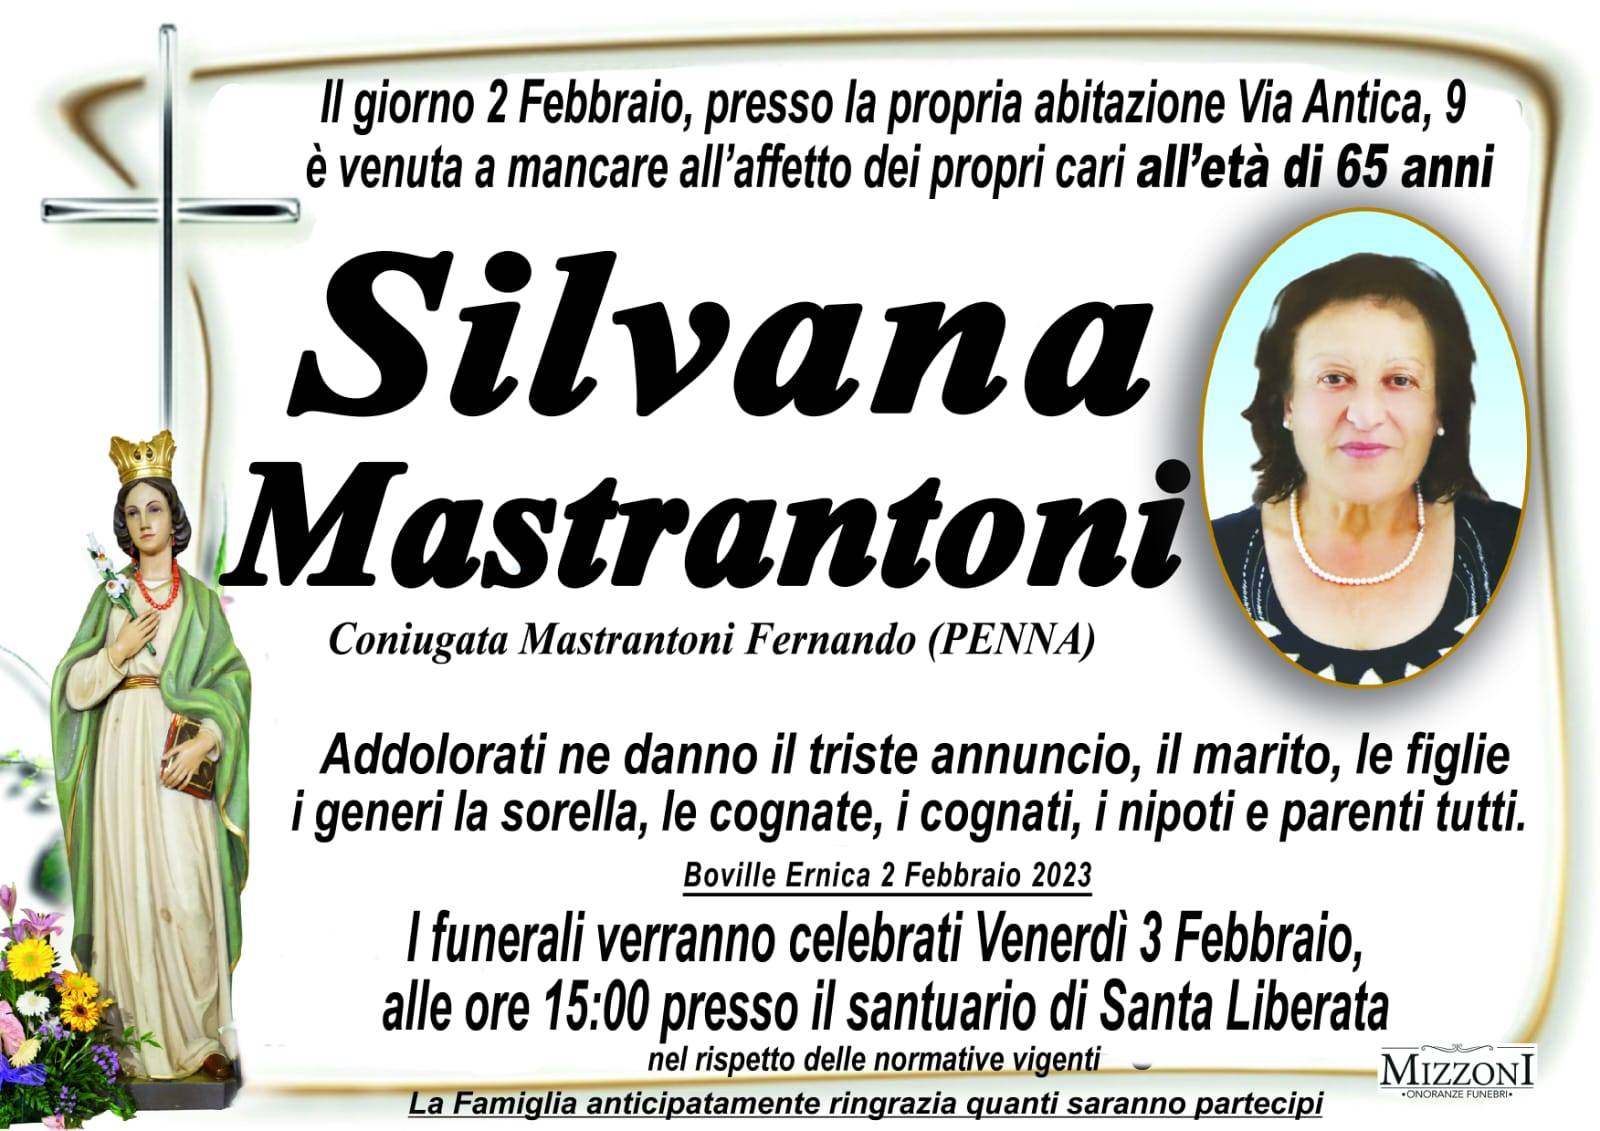 Silvana Mastrantoni